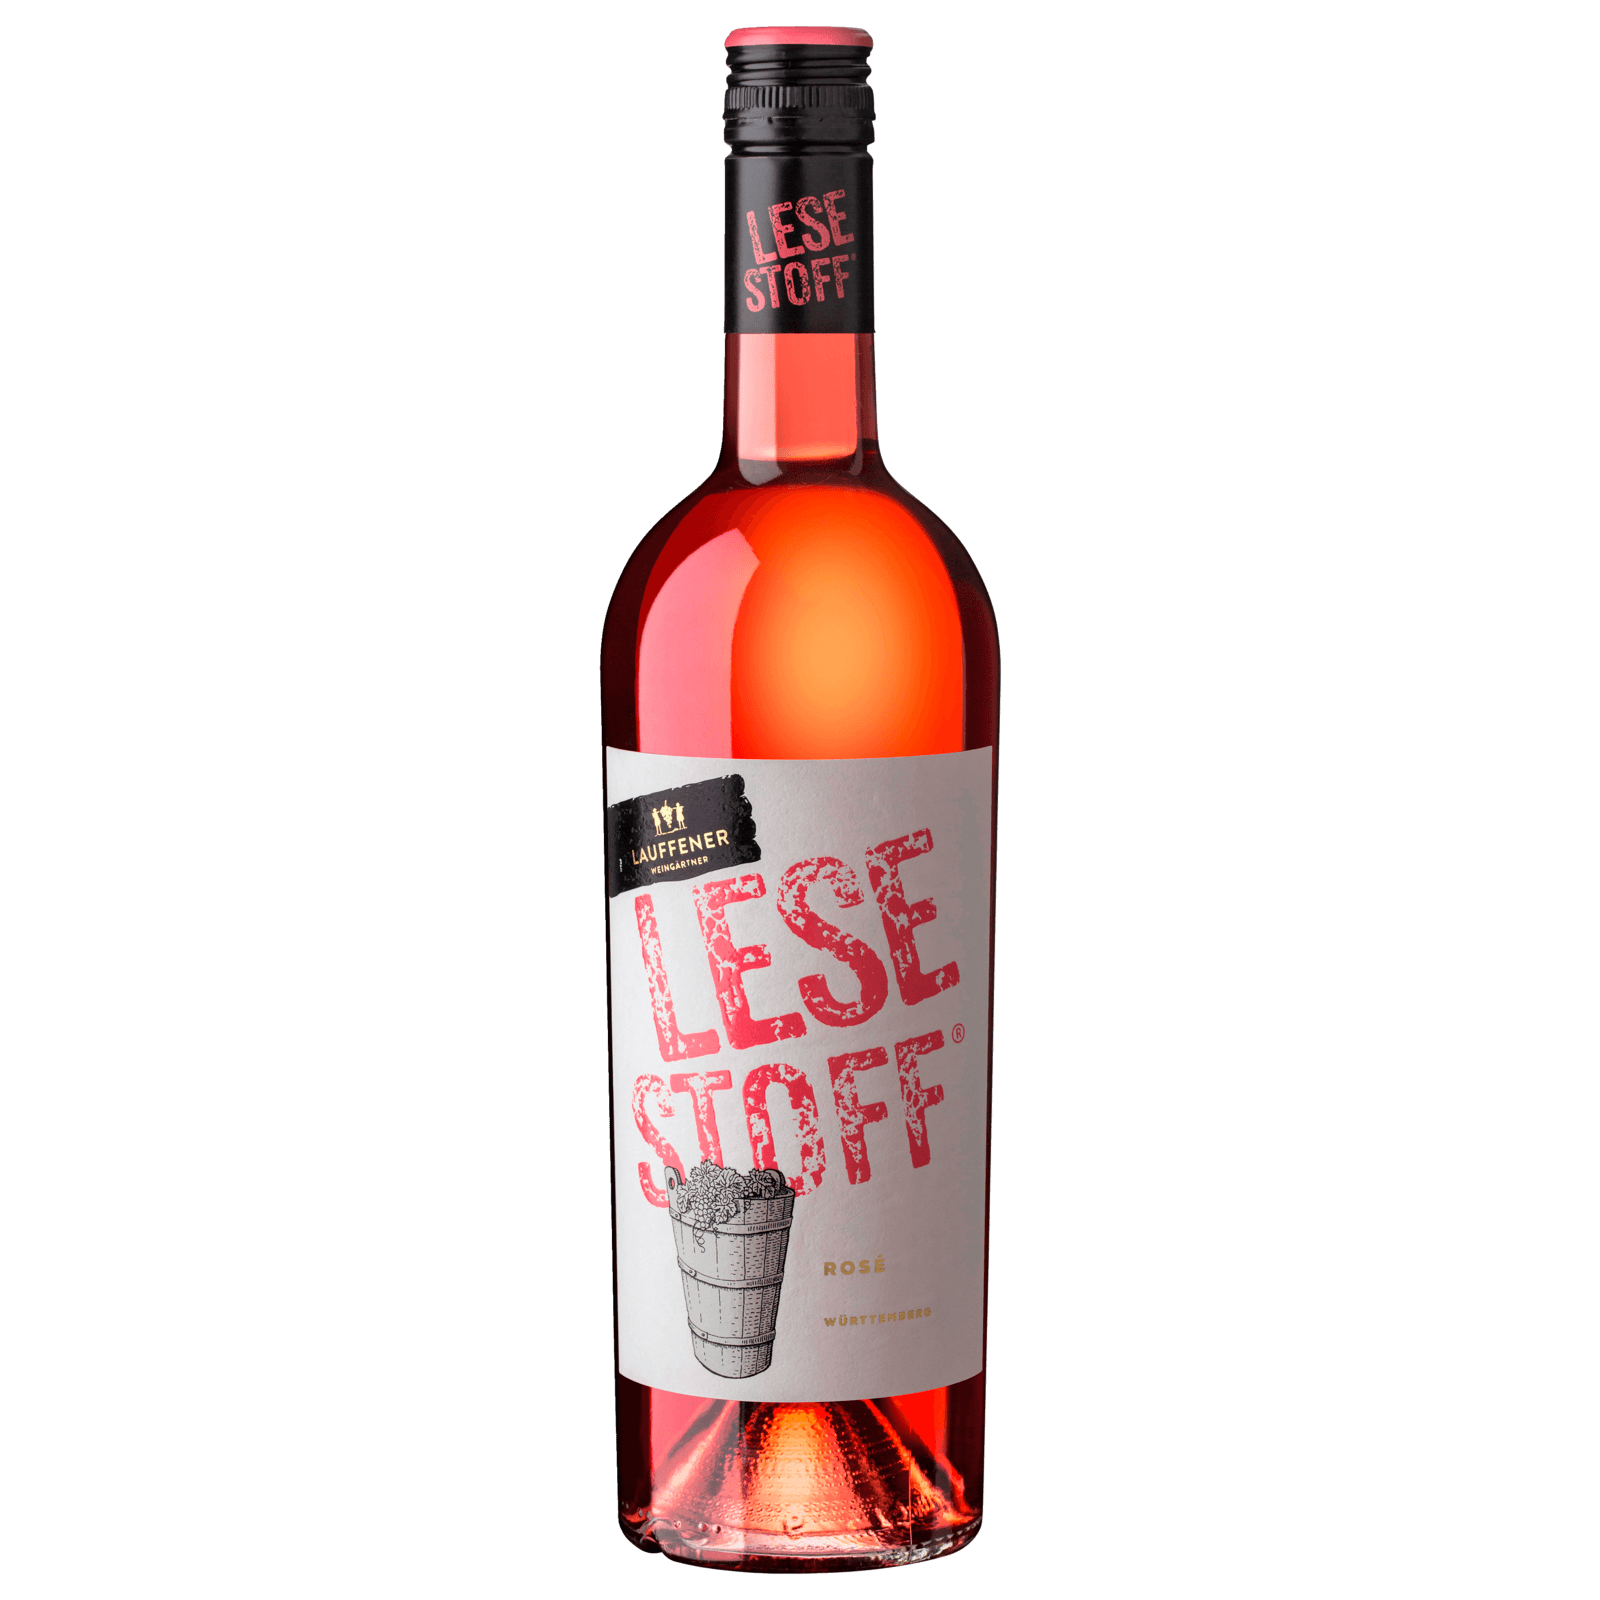 bestellen! online Lesestoff halbtrocken Rosé bei Württemberger REWE QbA 0,75l Lauffener